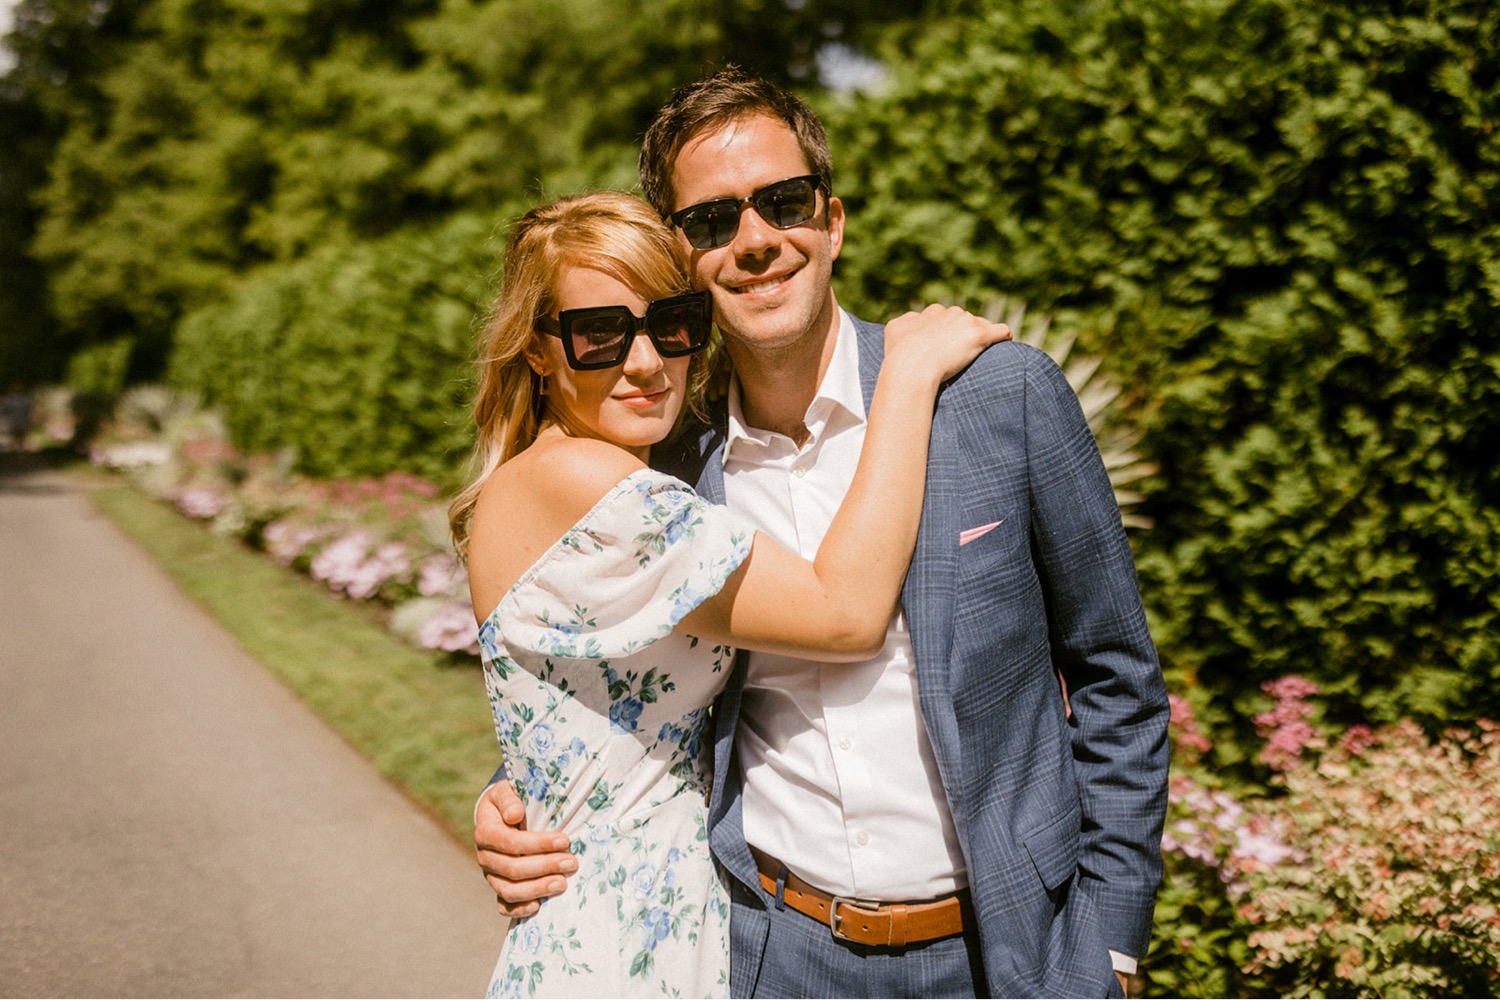 longwood gardens couple wearing sunglasses hugging